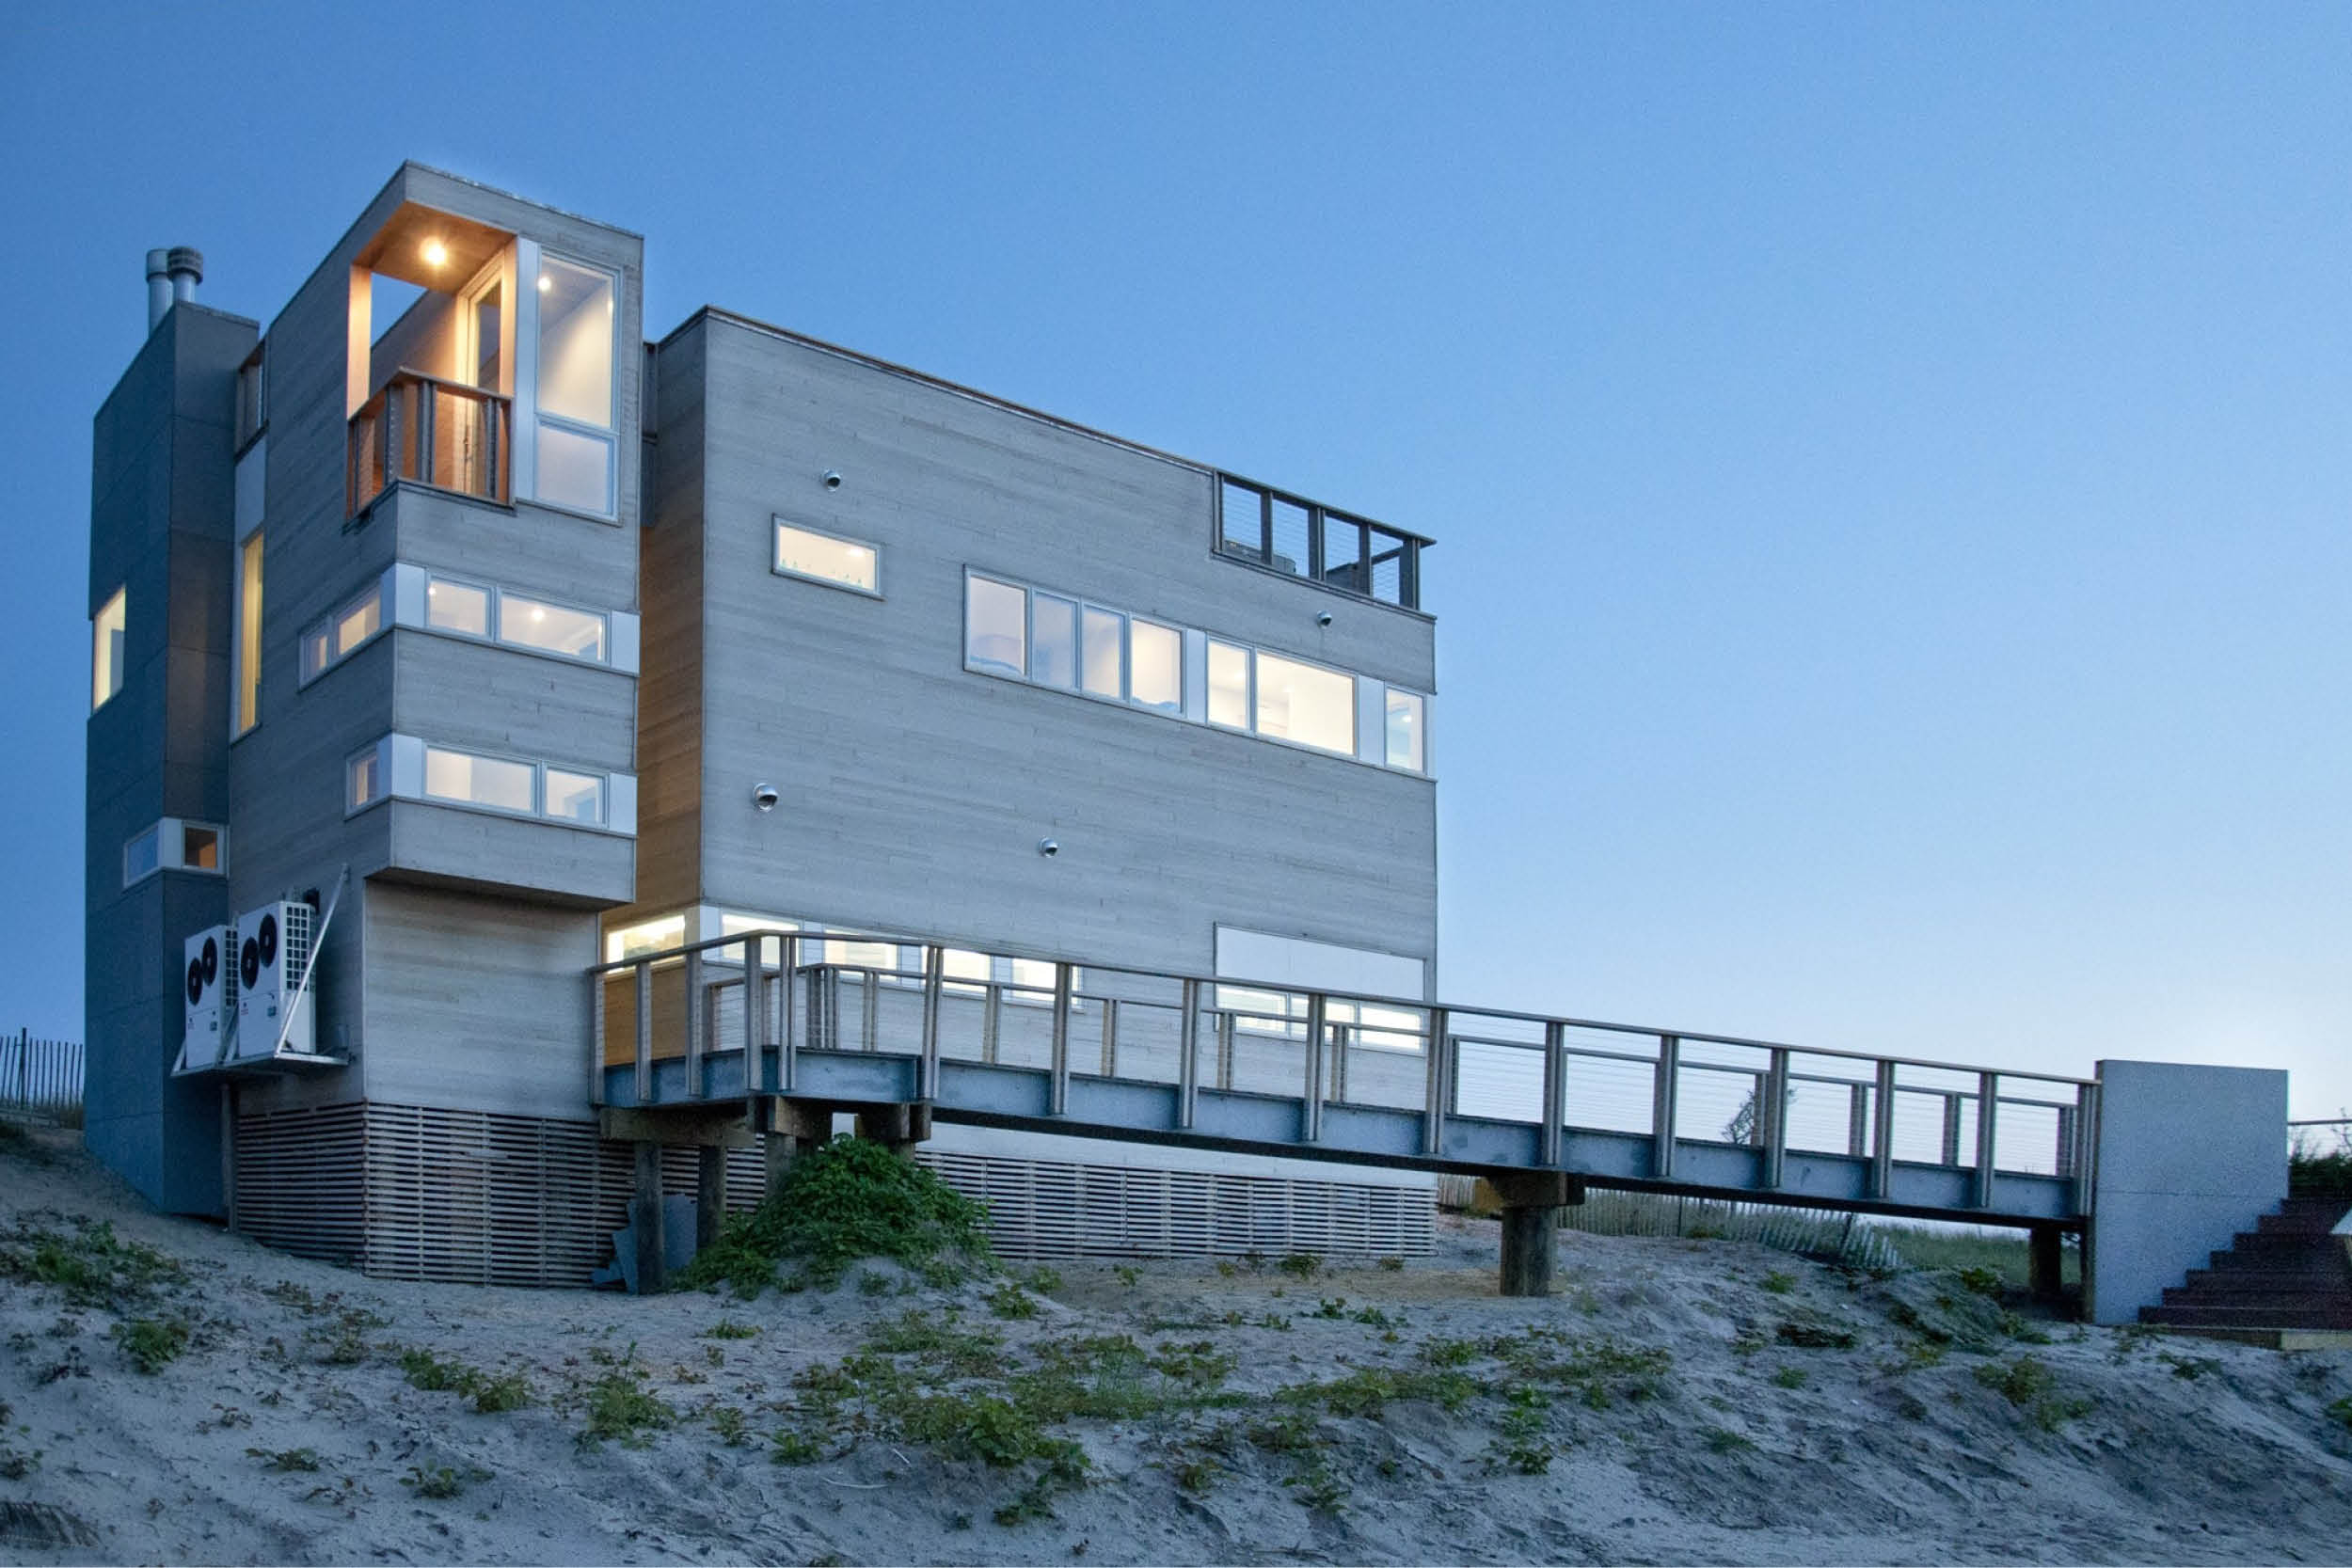 04-res4-resolution-4-architecture-modern-modular-home-prefab-dune-road-beach-house-exterior.jpg